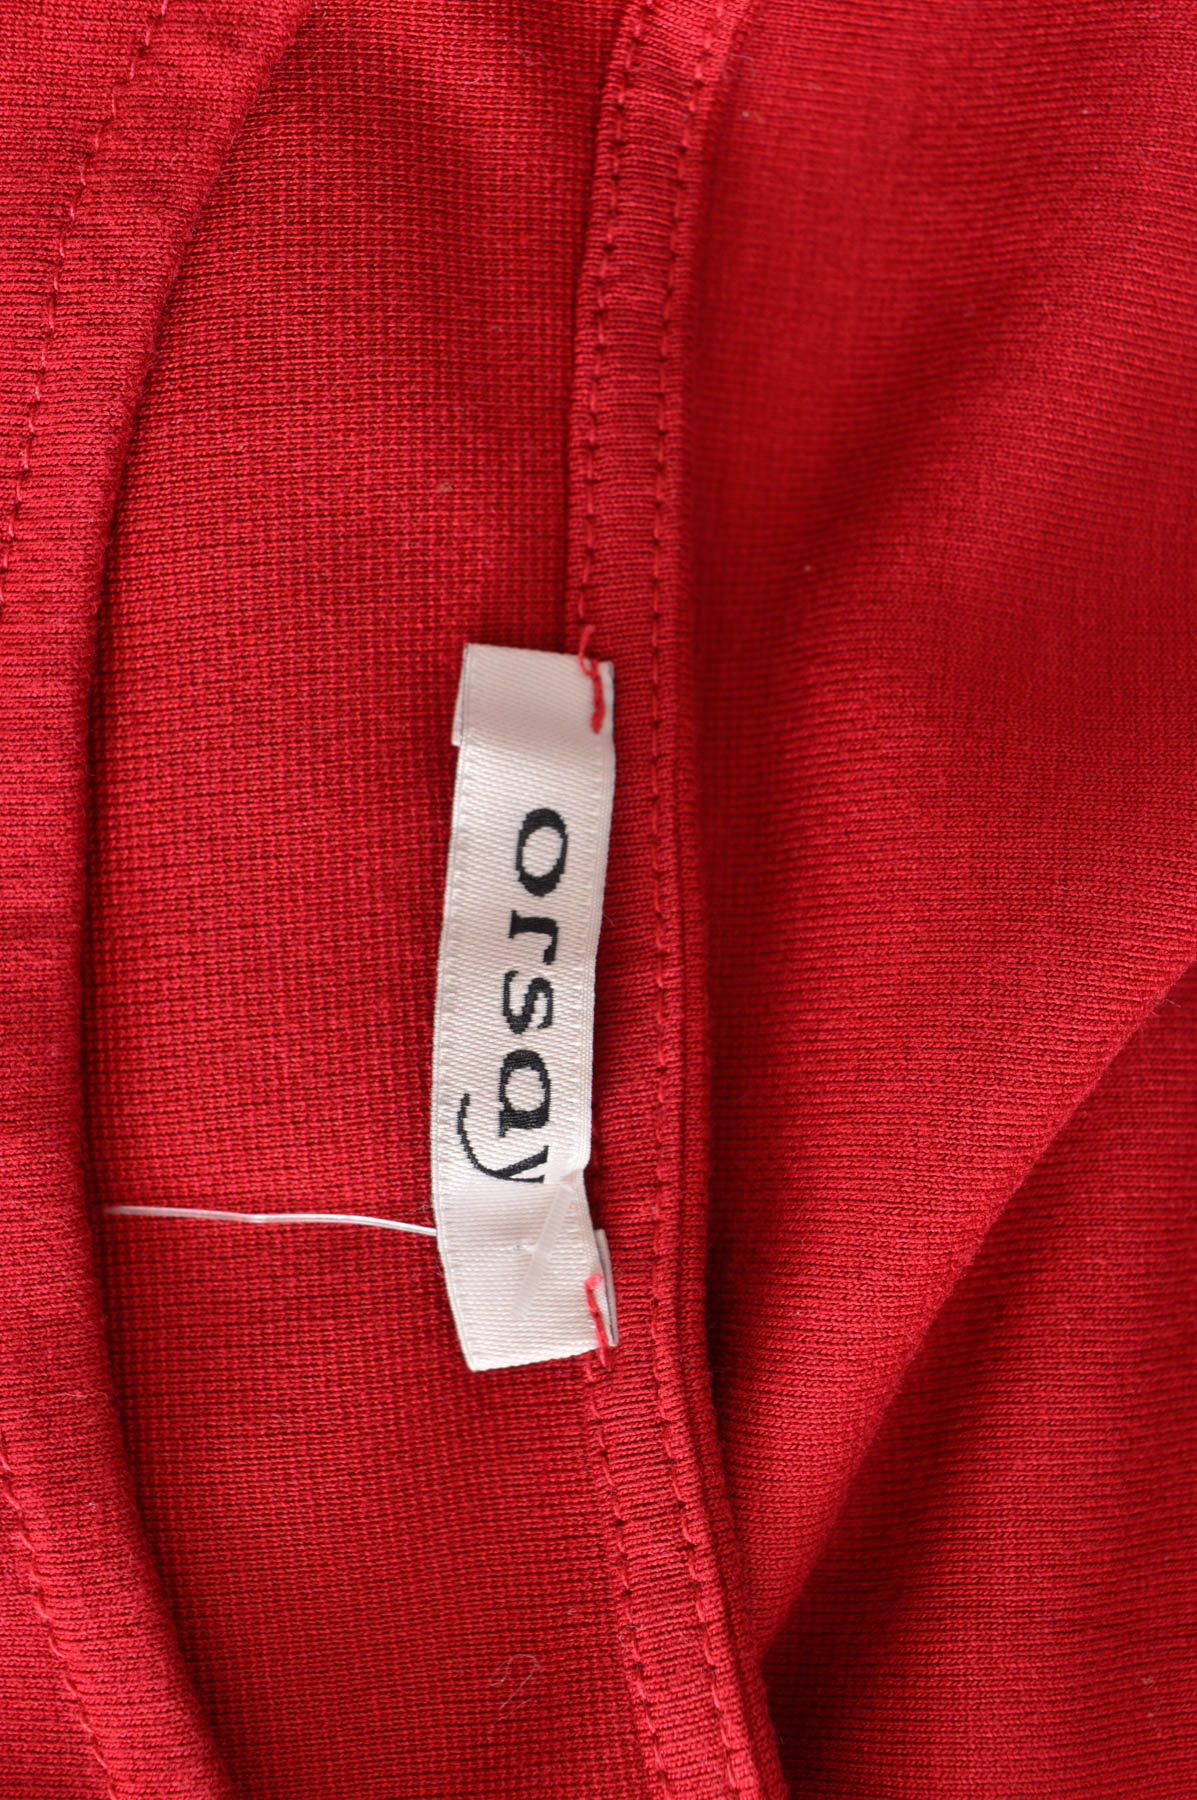 Women's blouse - Orsay - 2